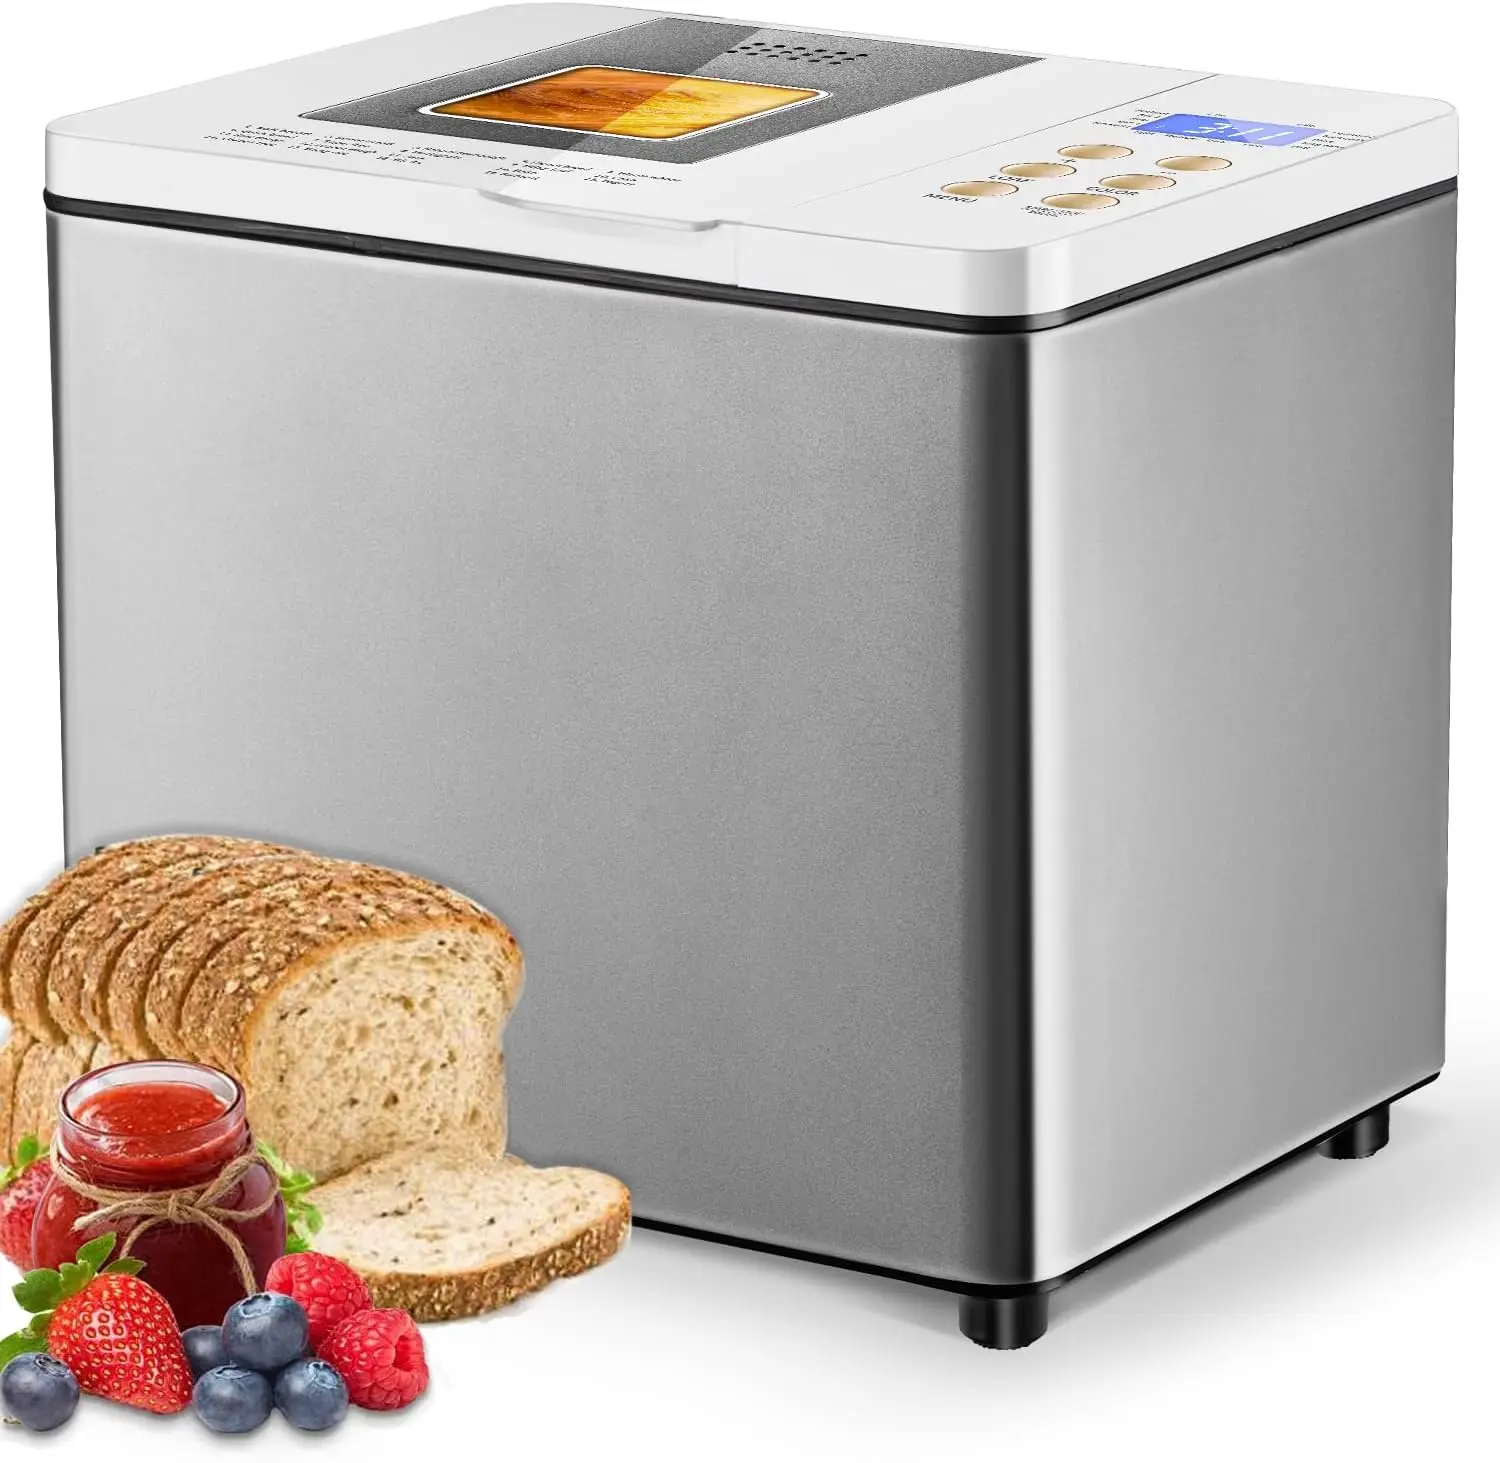 

Machine Dual-Heaters, 19-in-1 Horizontal Bread Maker Gluten Free, Sourdough, Pizza Dough, Stir-Fry Setting, Stainless Steel, 1.5